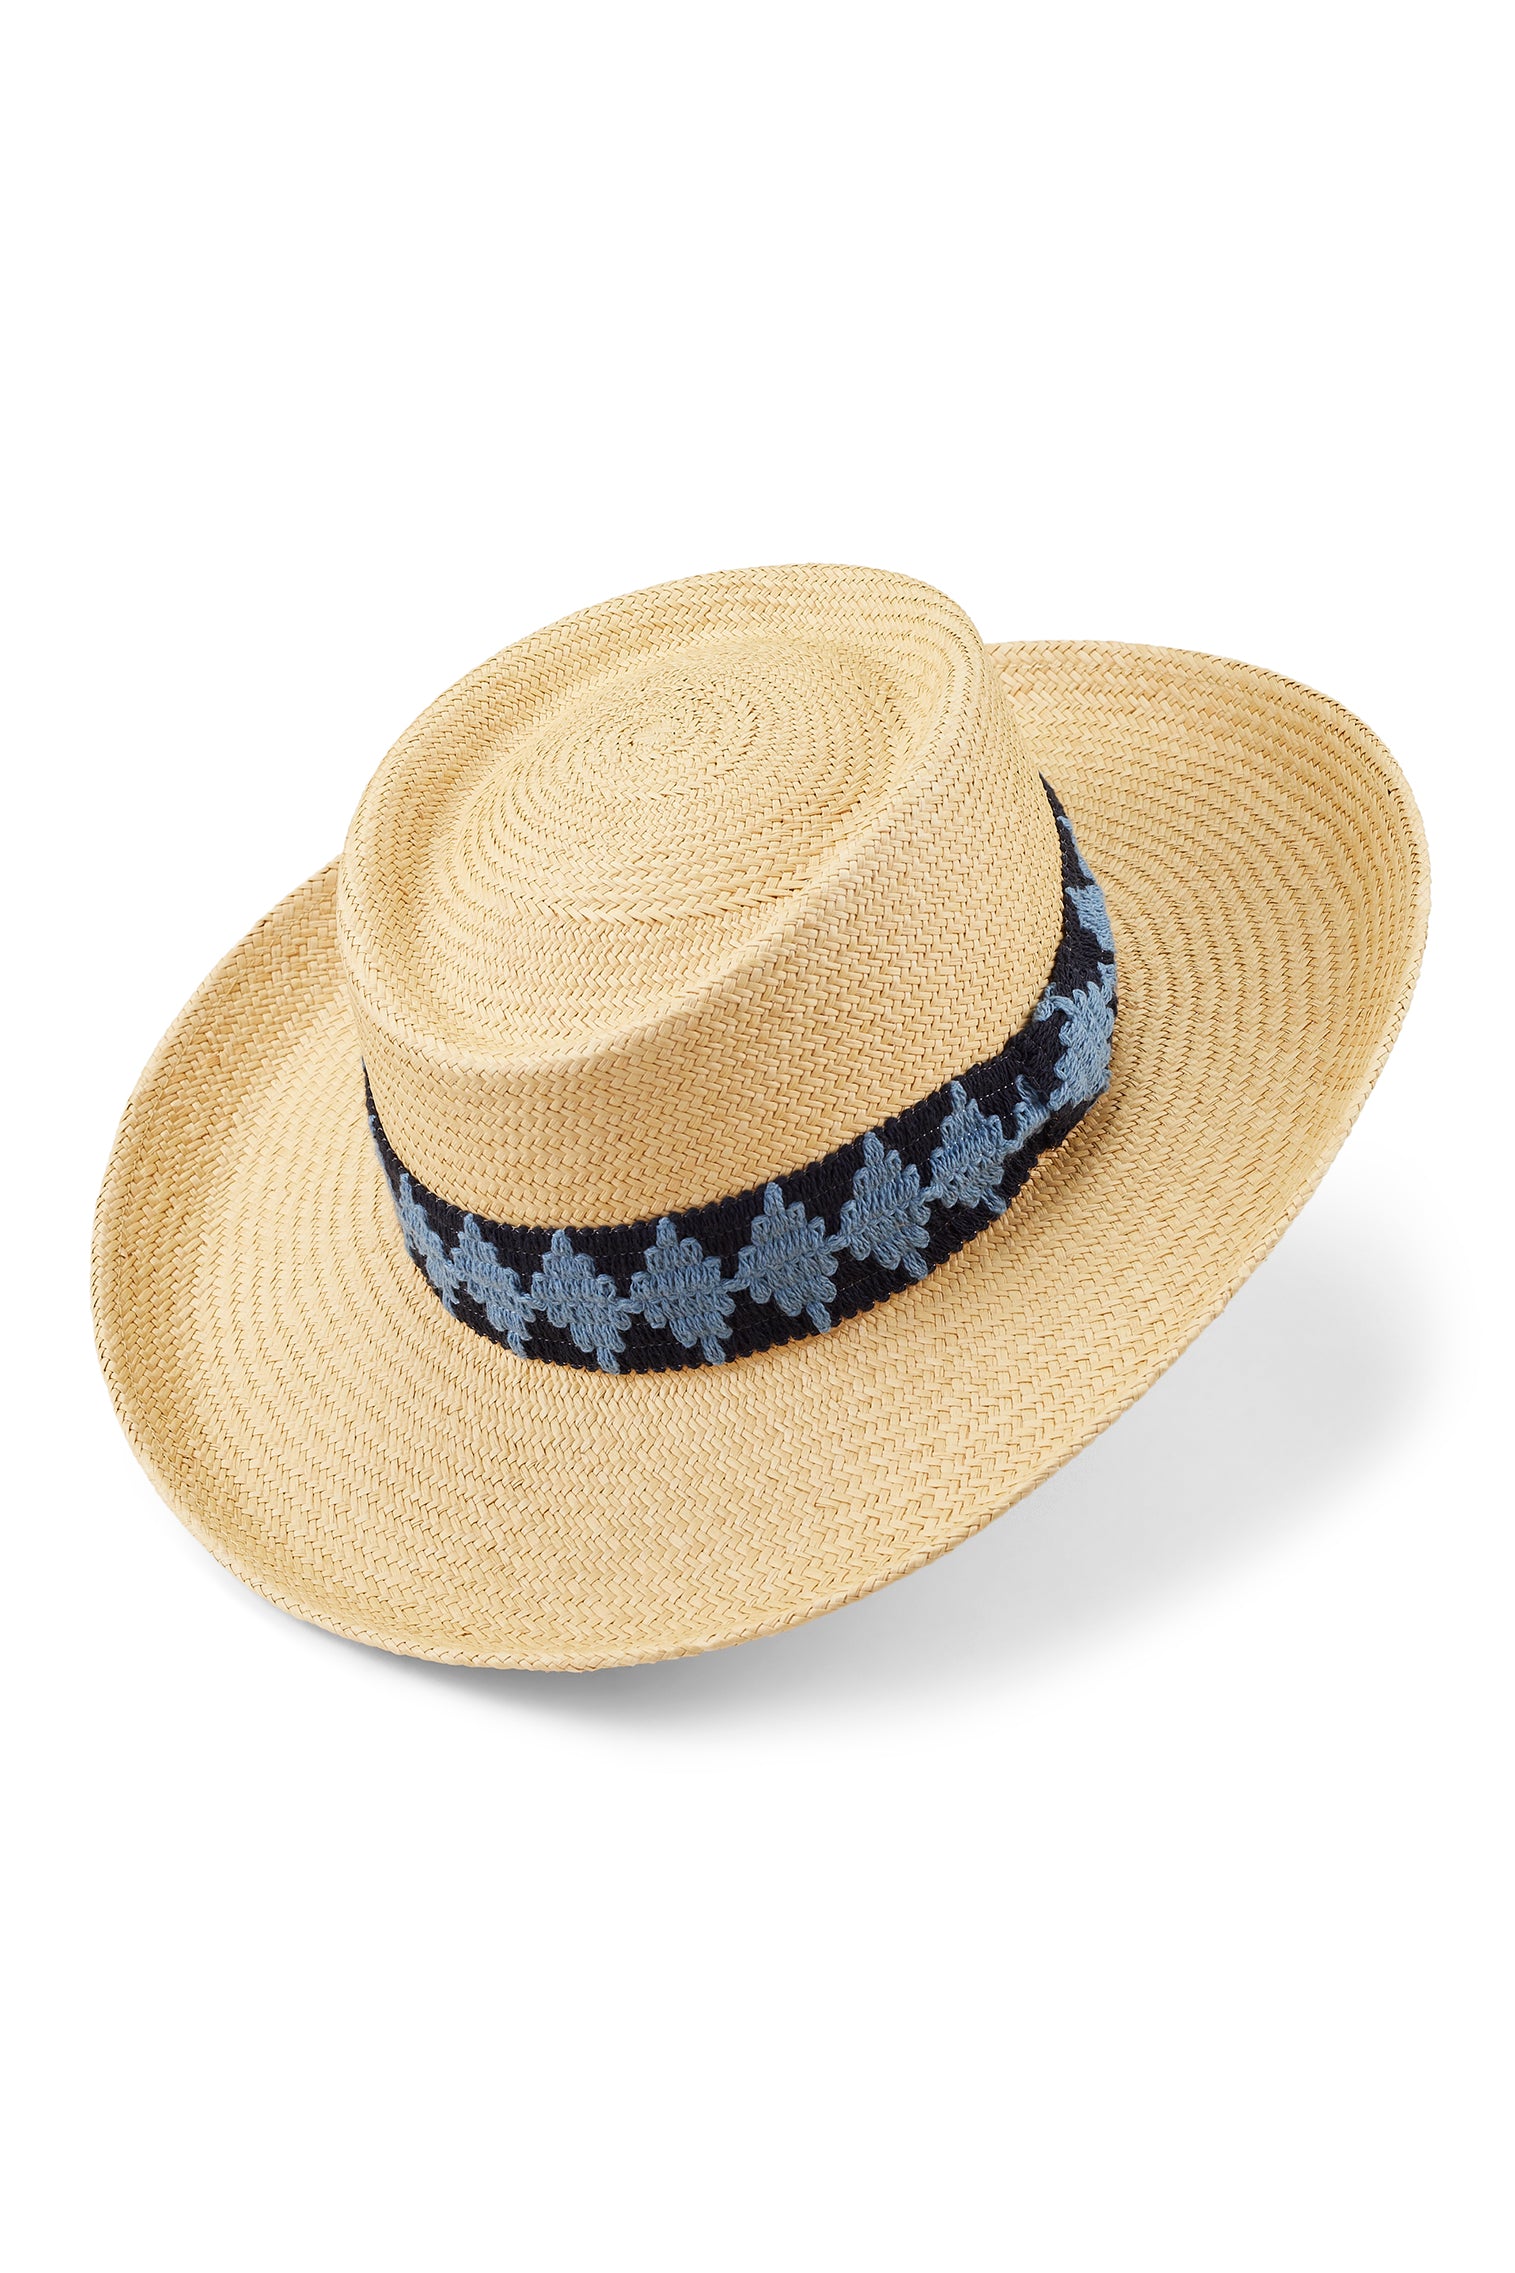 Heath Panama - Panamas, Straw and Sun Hats for Men - Lock & Co. Hatters London UK